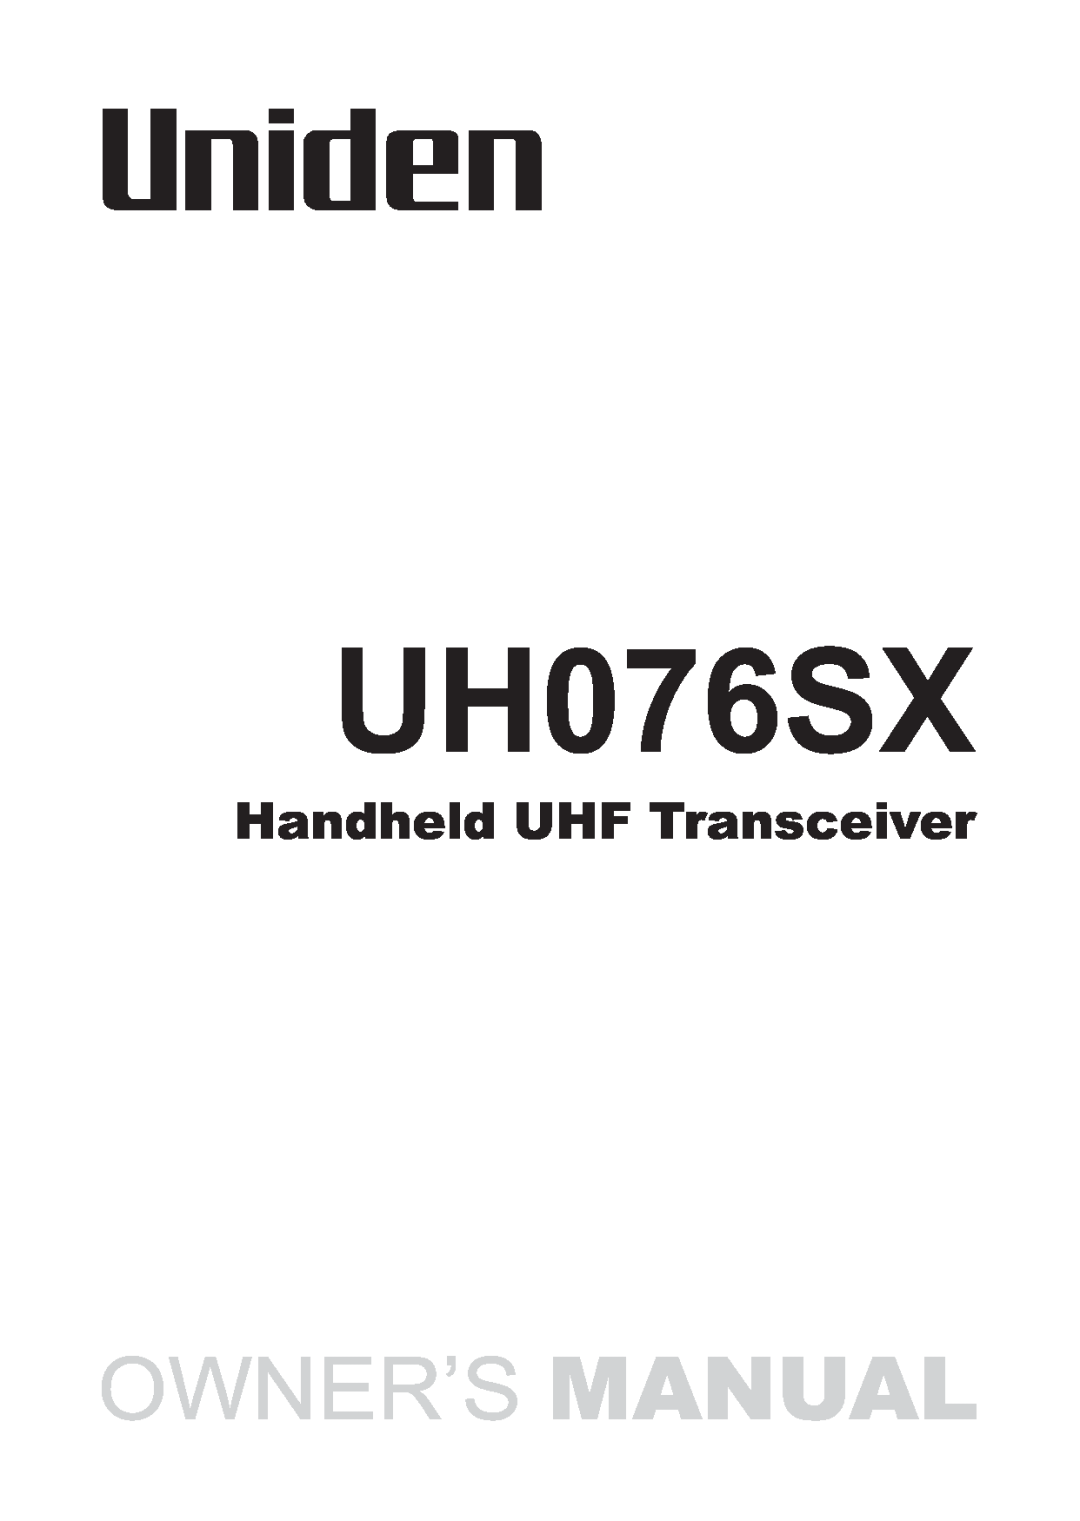 Uniden UH076SX owner manual Handheld UHF Transceiver 